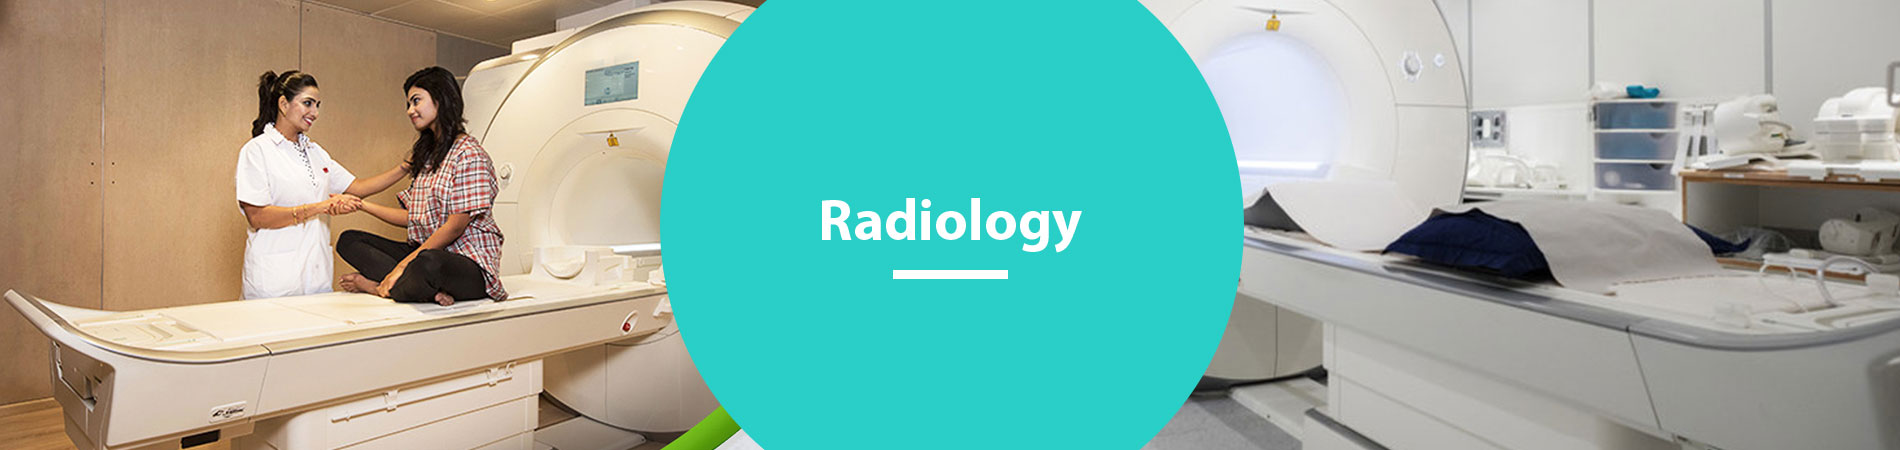 SV banner Radiology